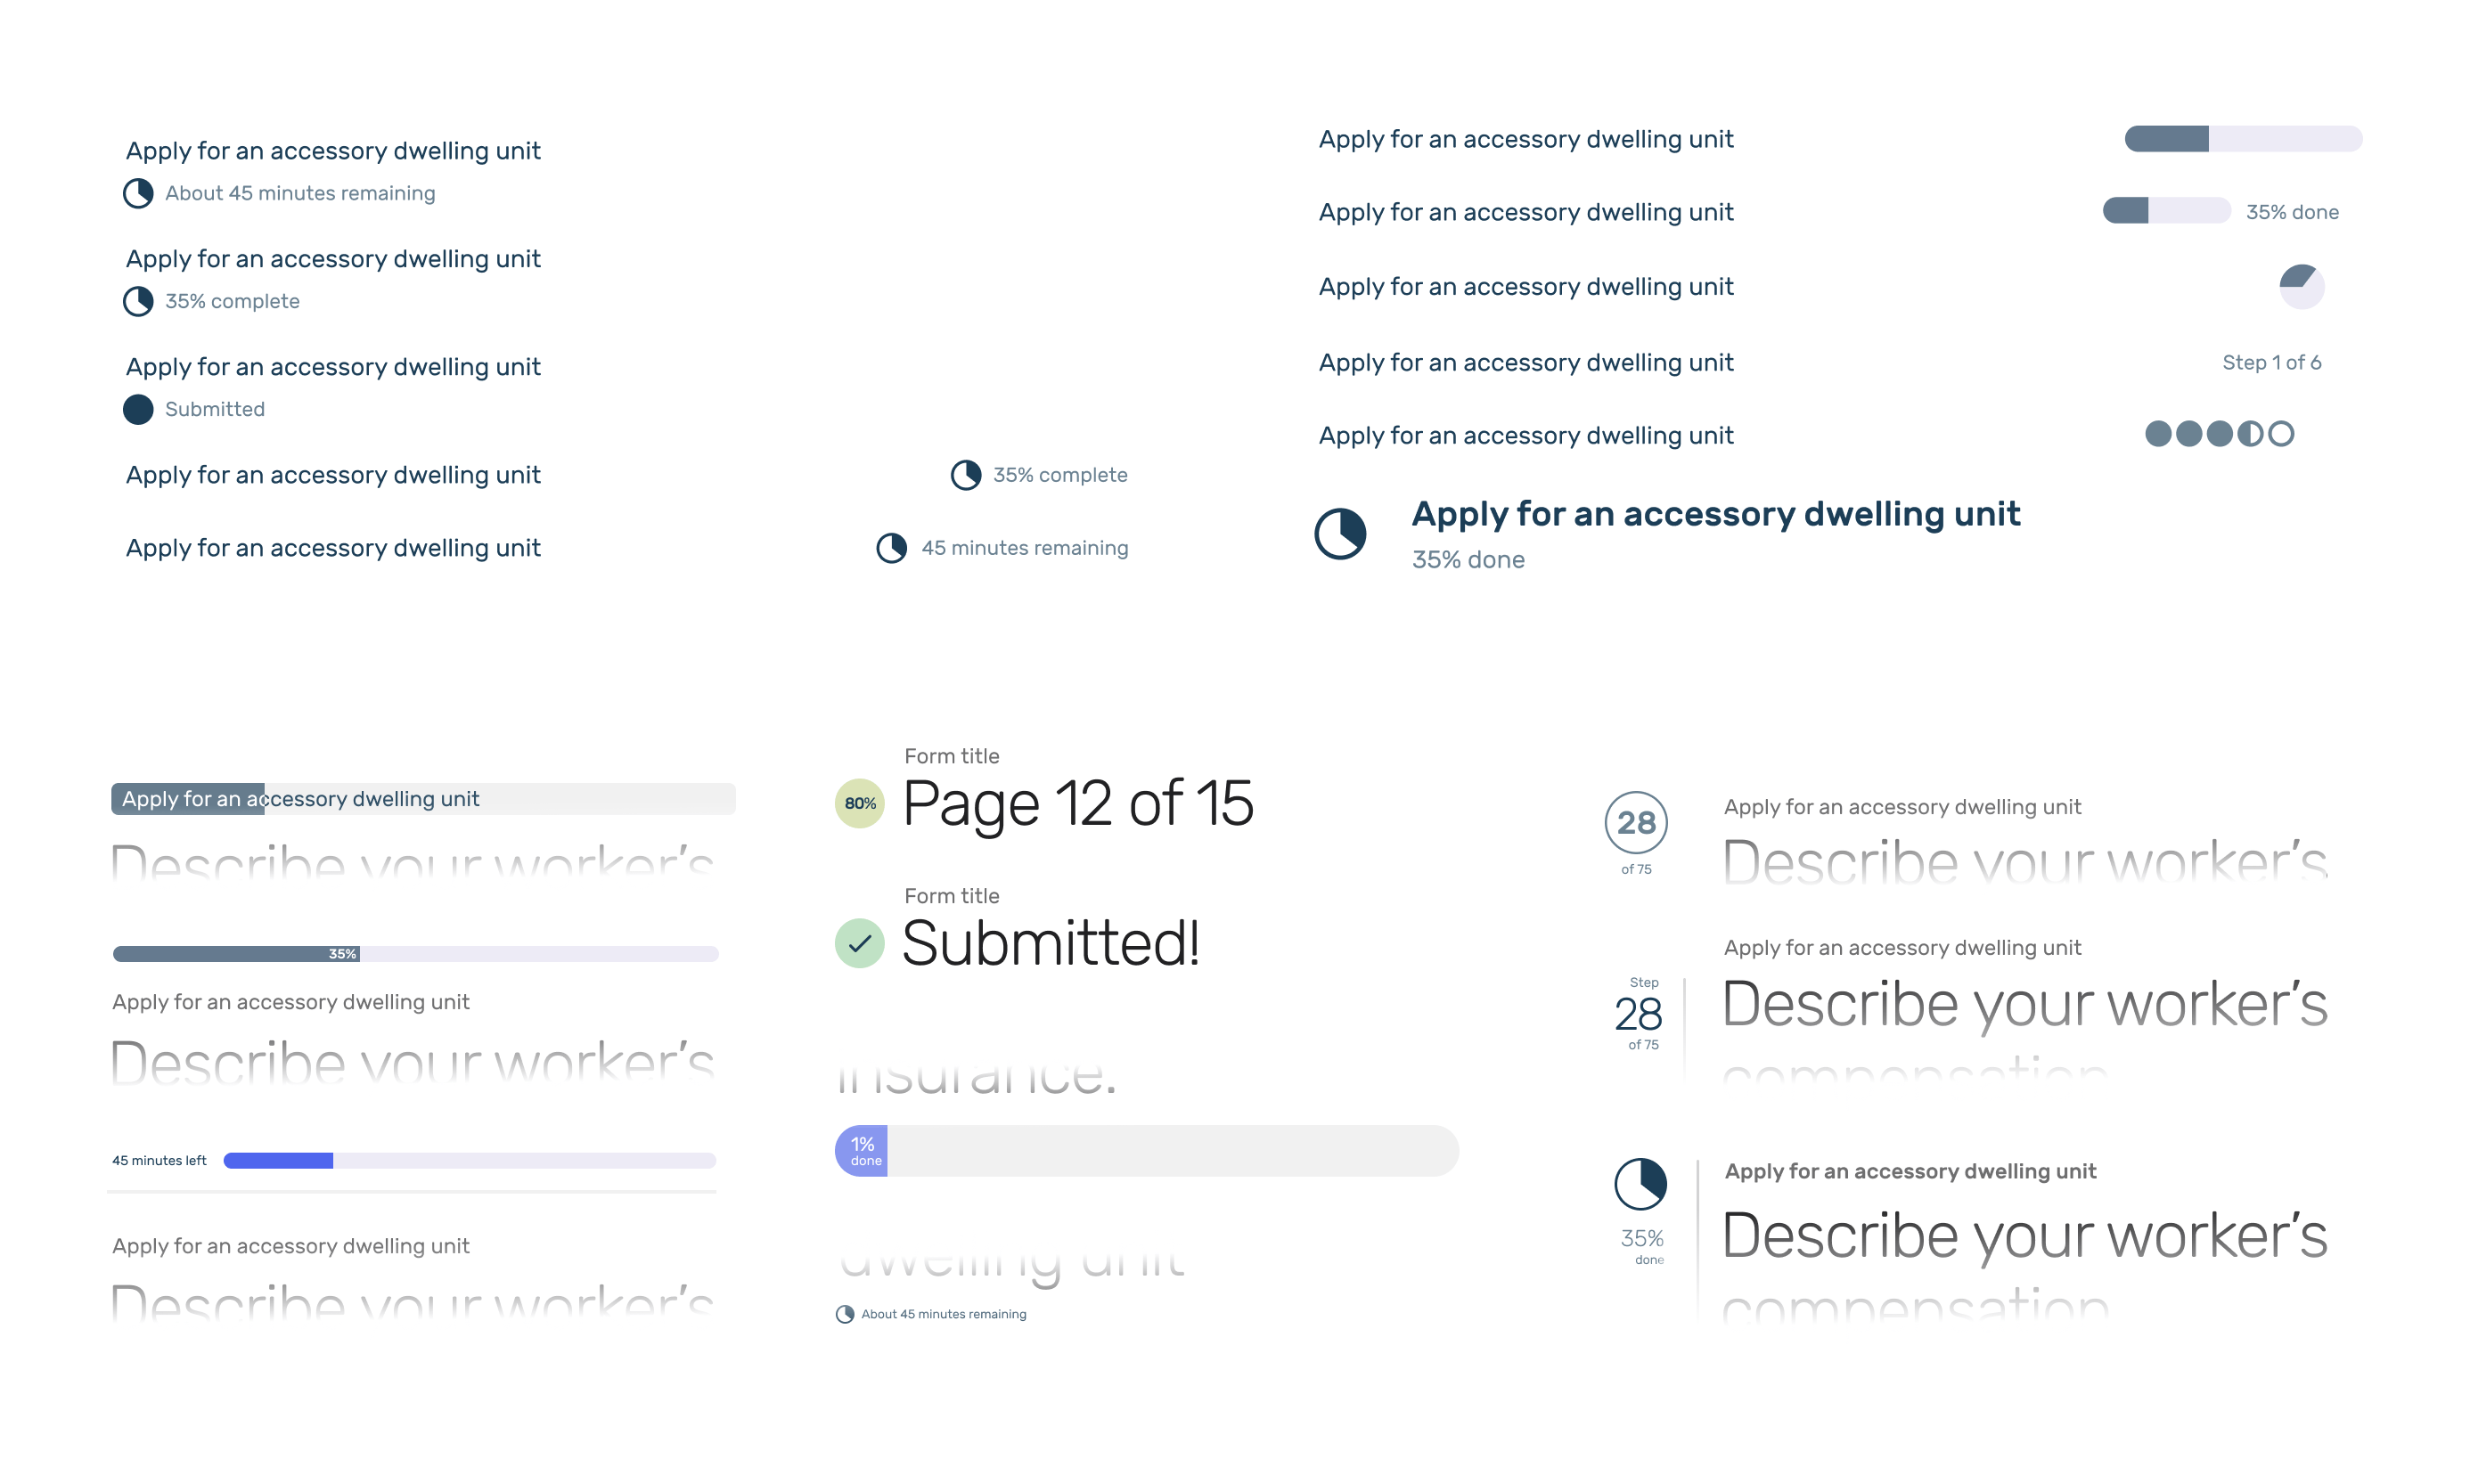 Various design explorations for the form's progress bar.